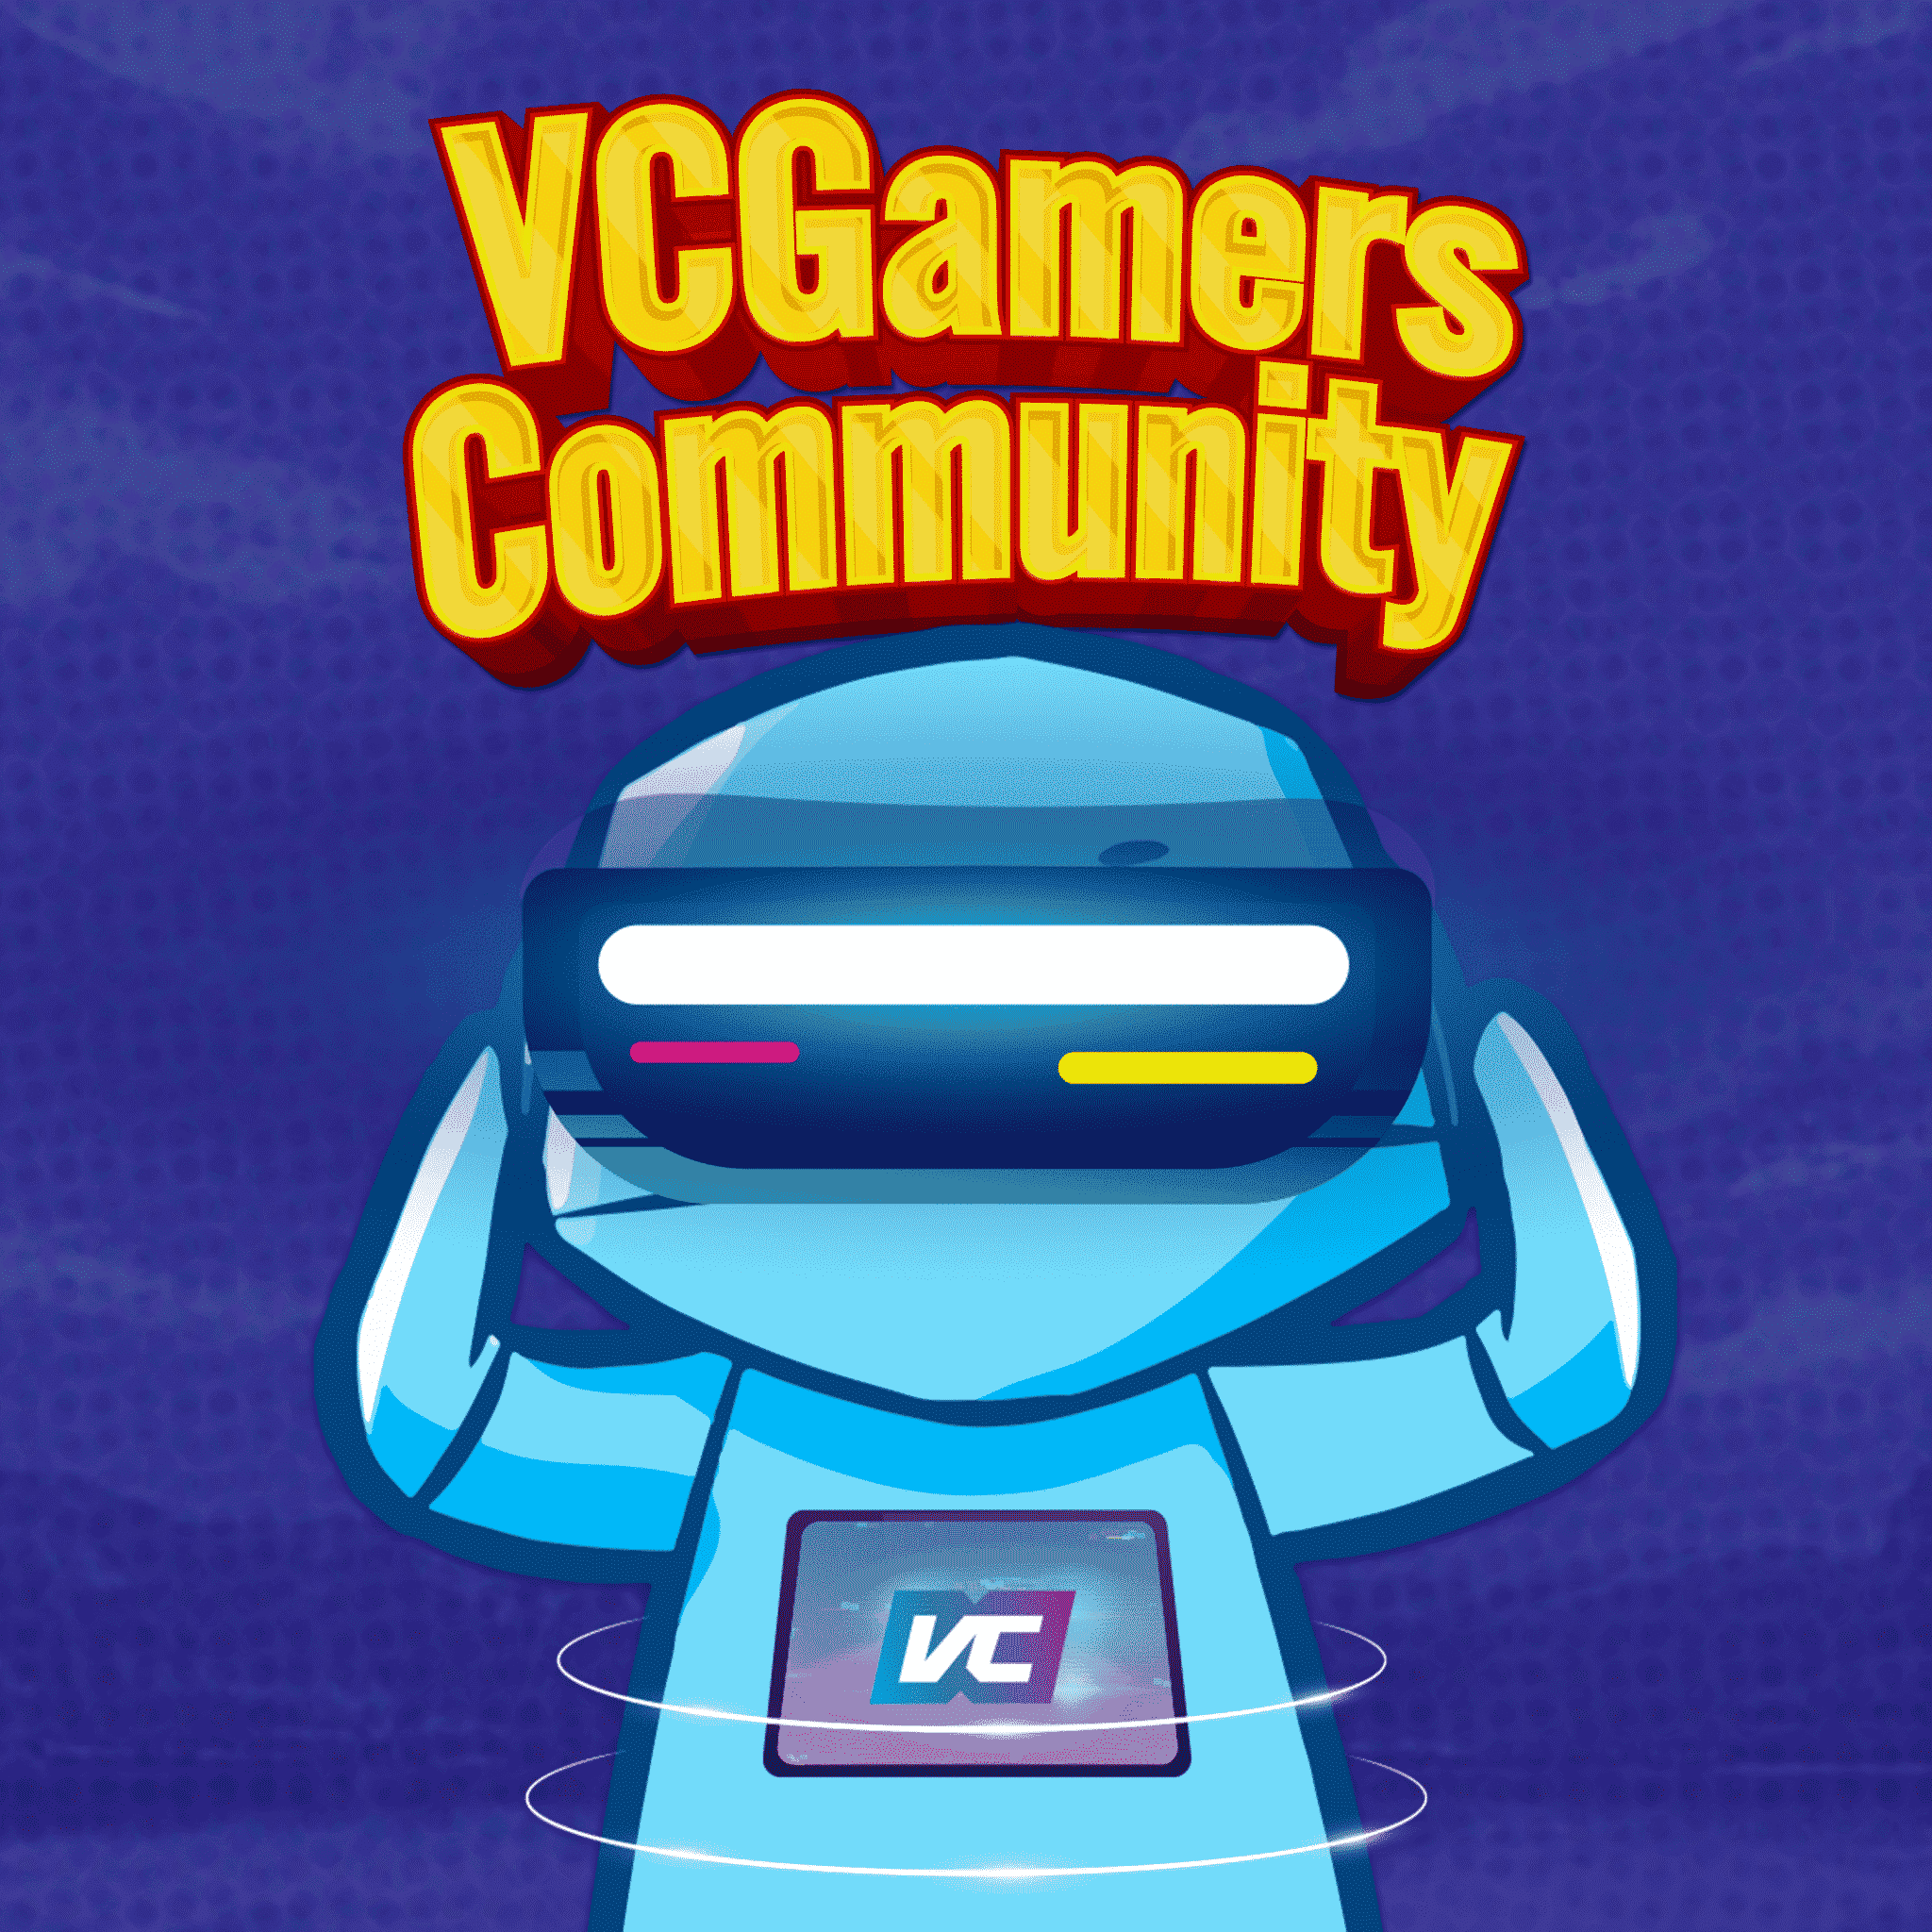 vcgamers community